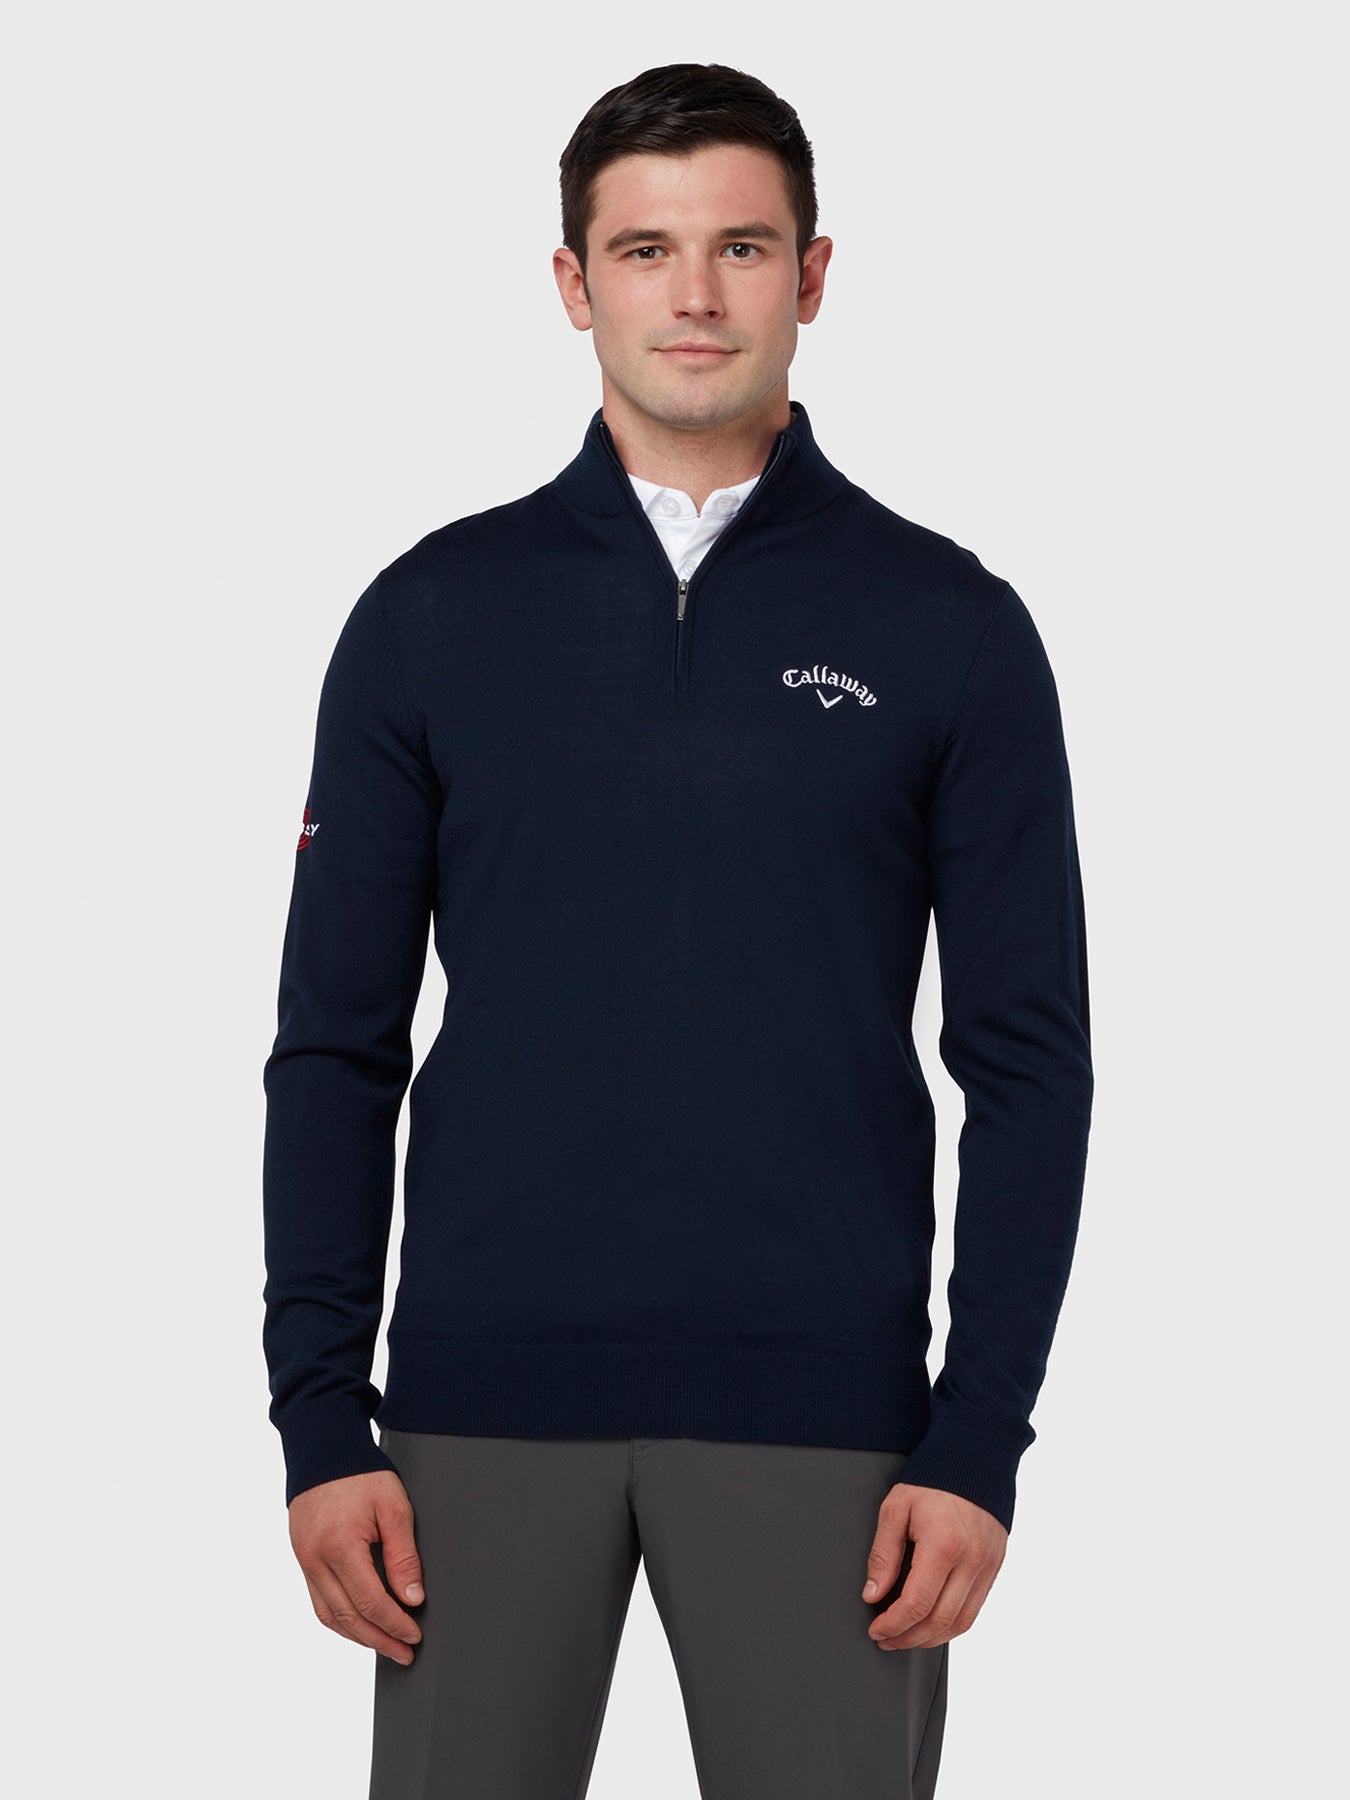 View Quarter Zip Blended Merino Sweater In Navy Blue Navy Blue XL information